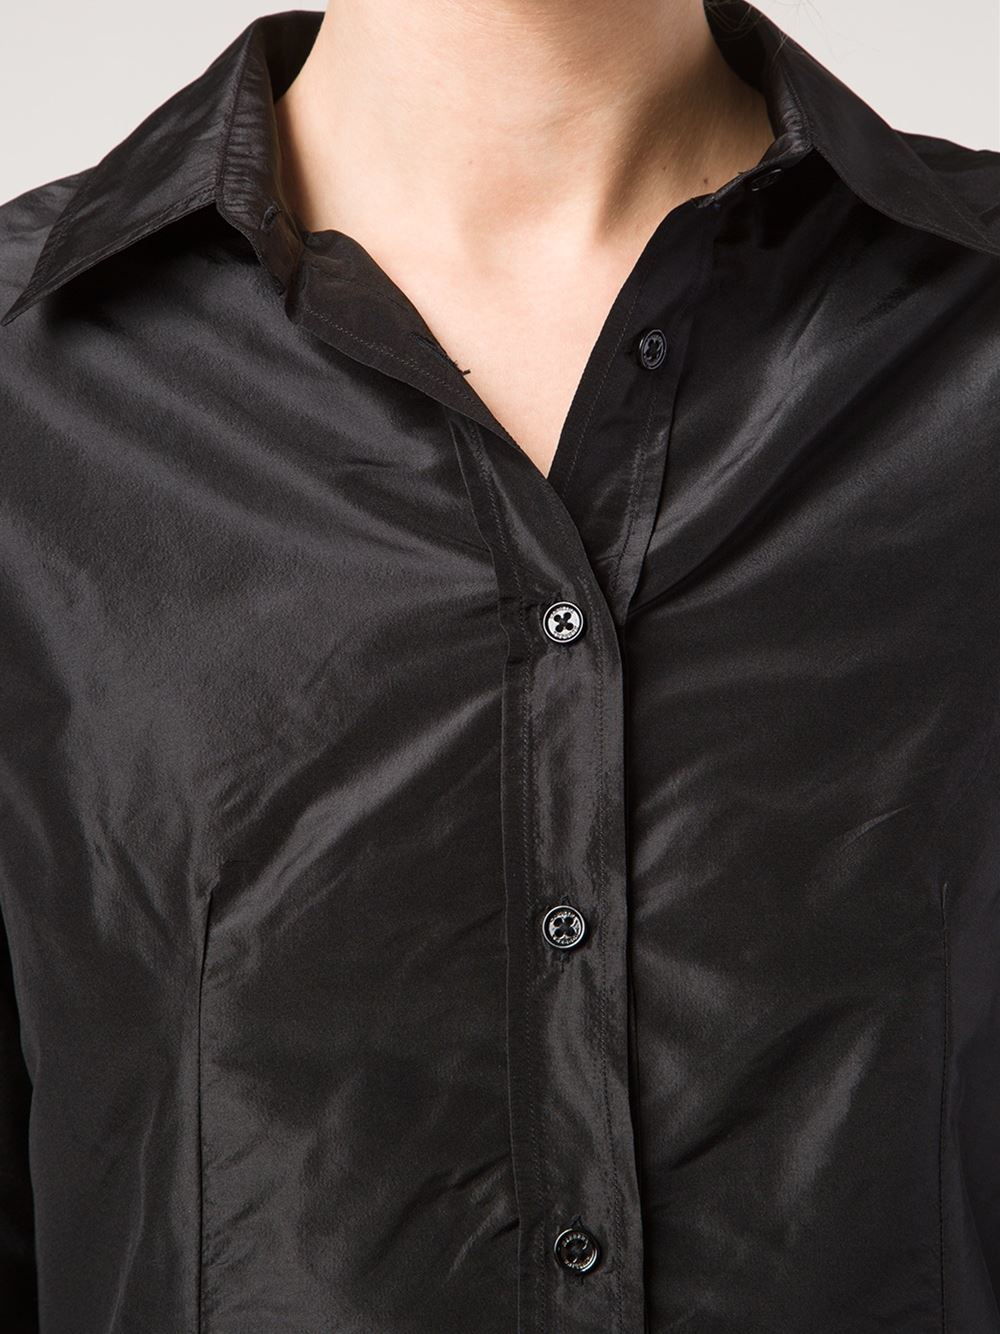 Lyst - Carolina herrera Cropped Shirt in Black